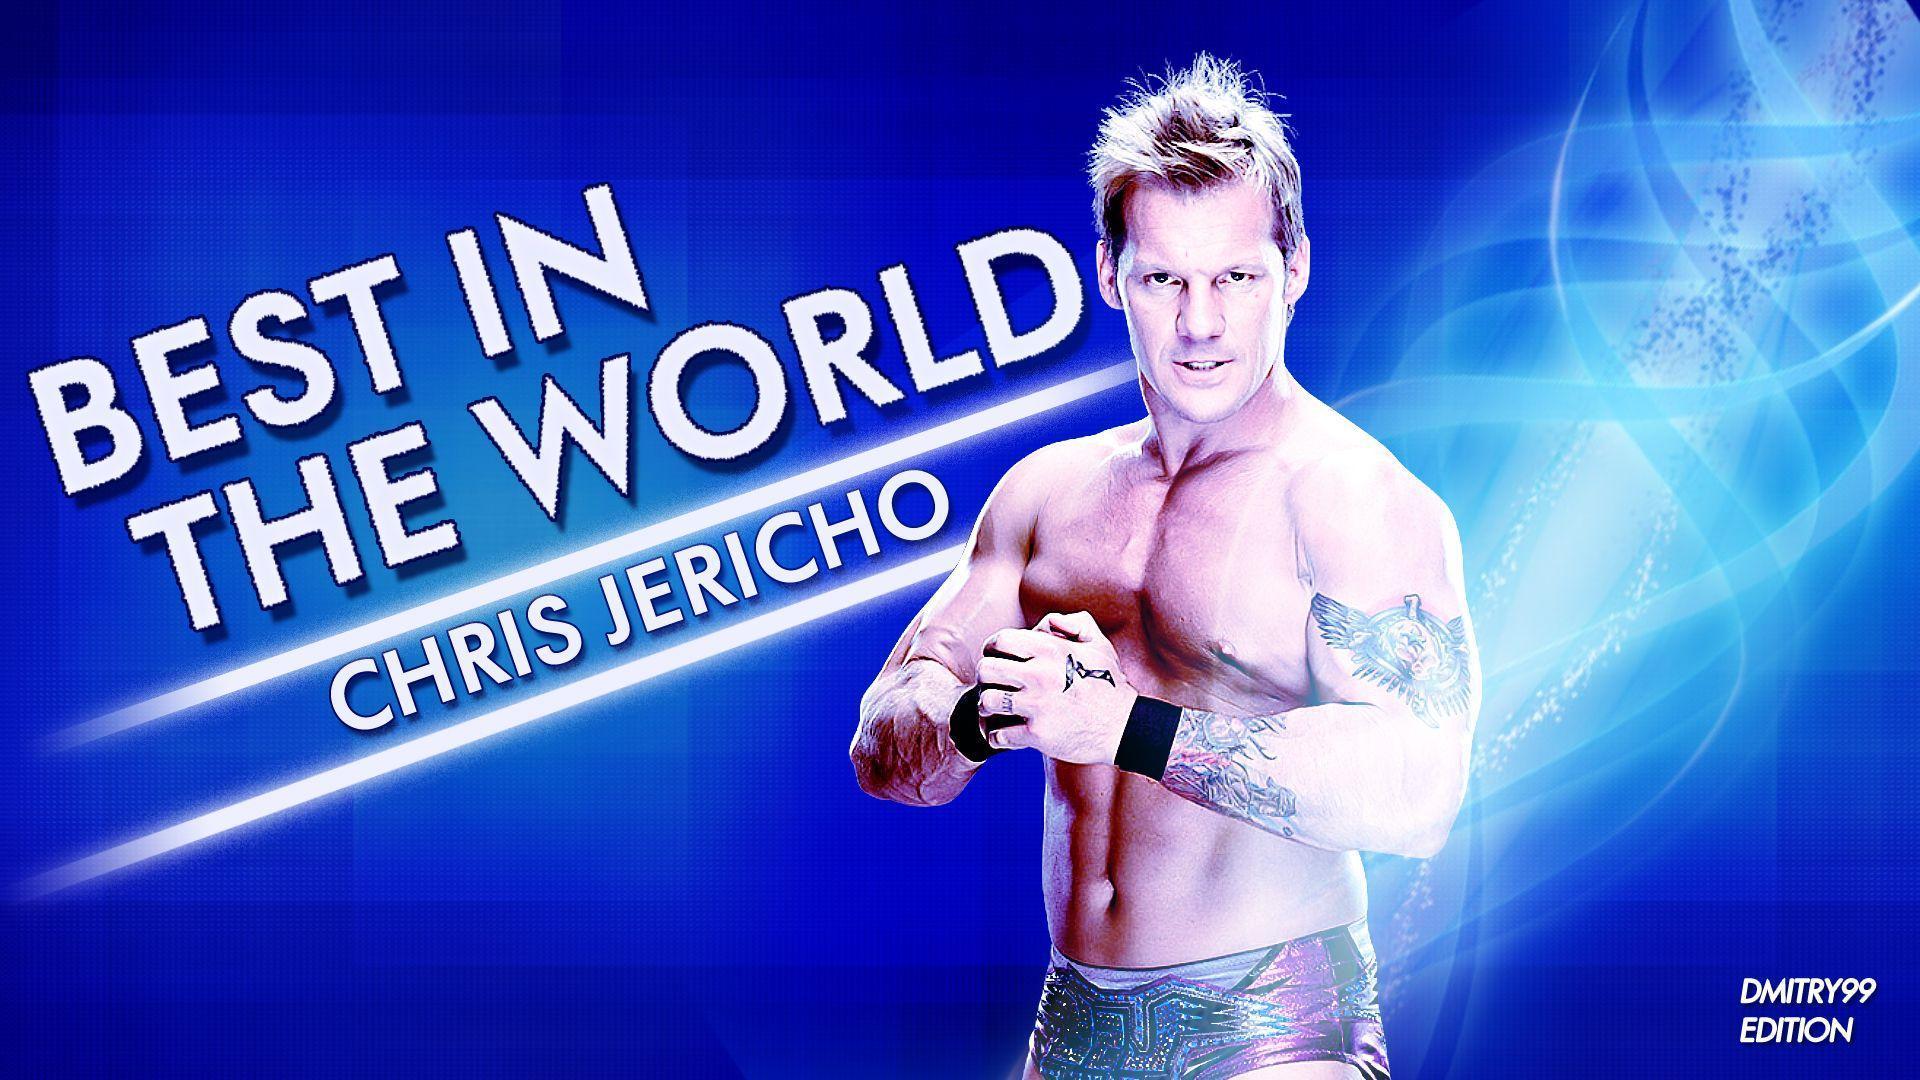 Chris Jericho HD Image